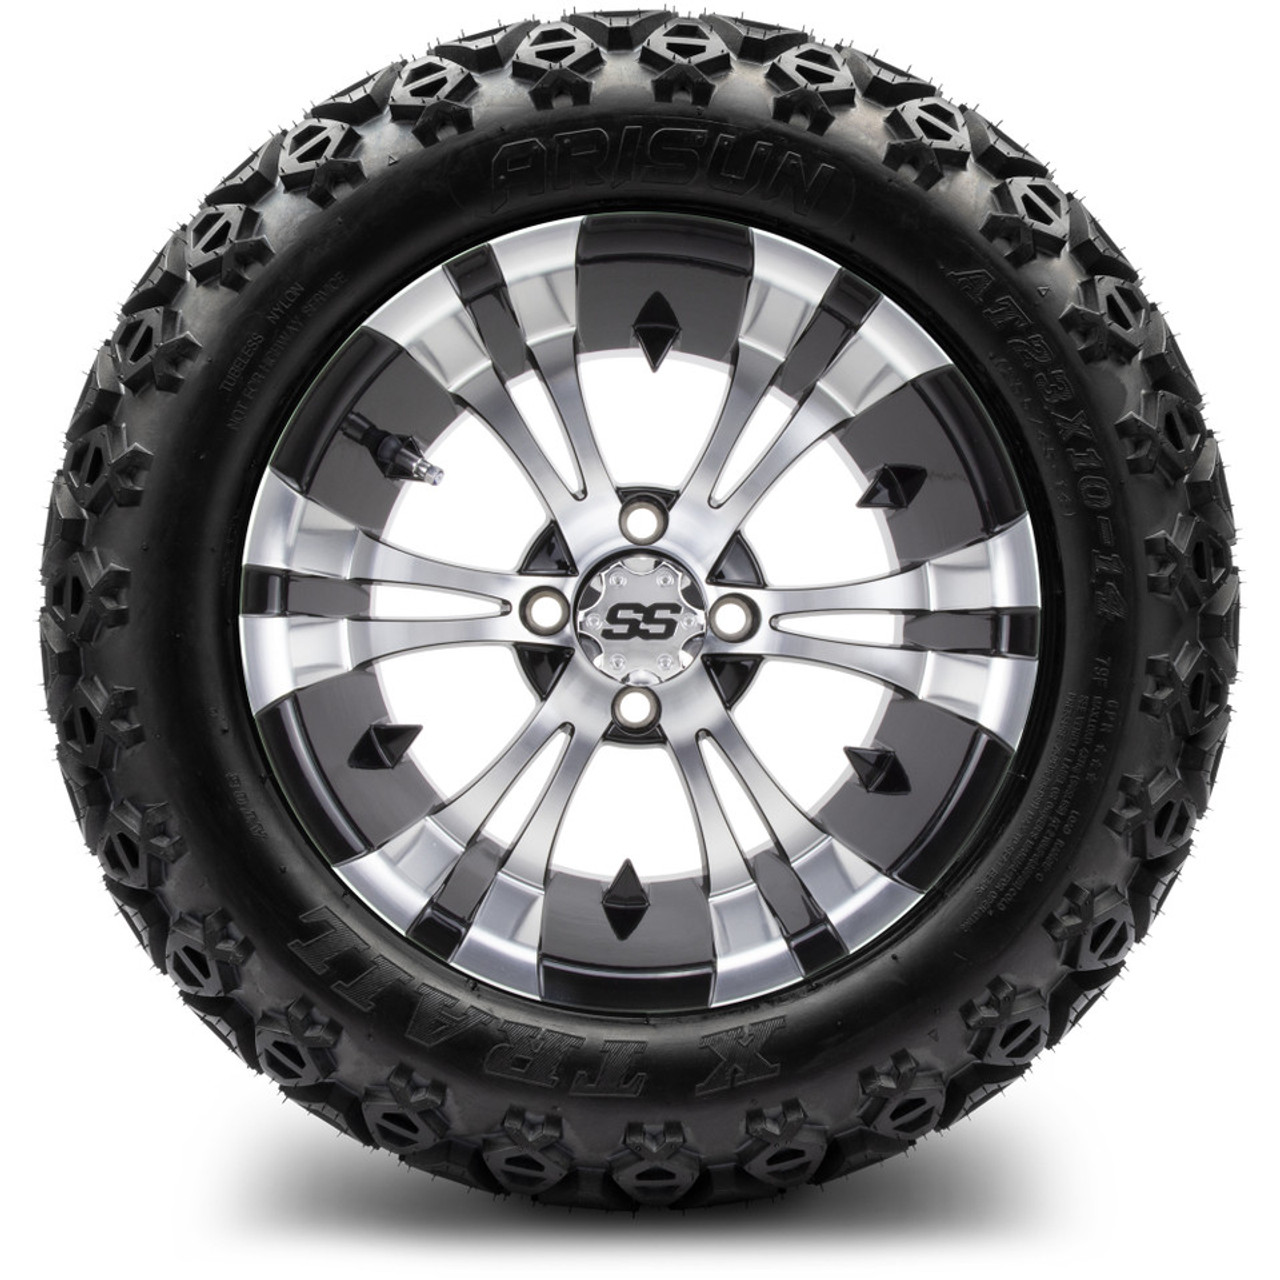 MODZ 14" Vampire Machined Black Wheels & Off-Road Tires Combo